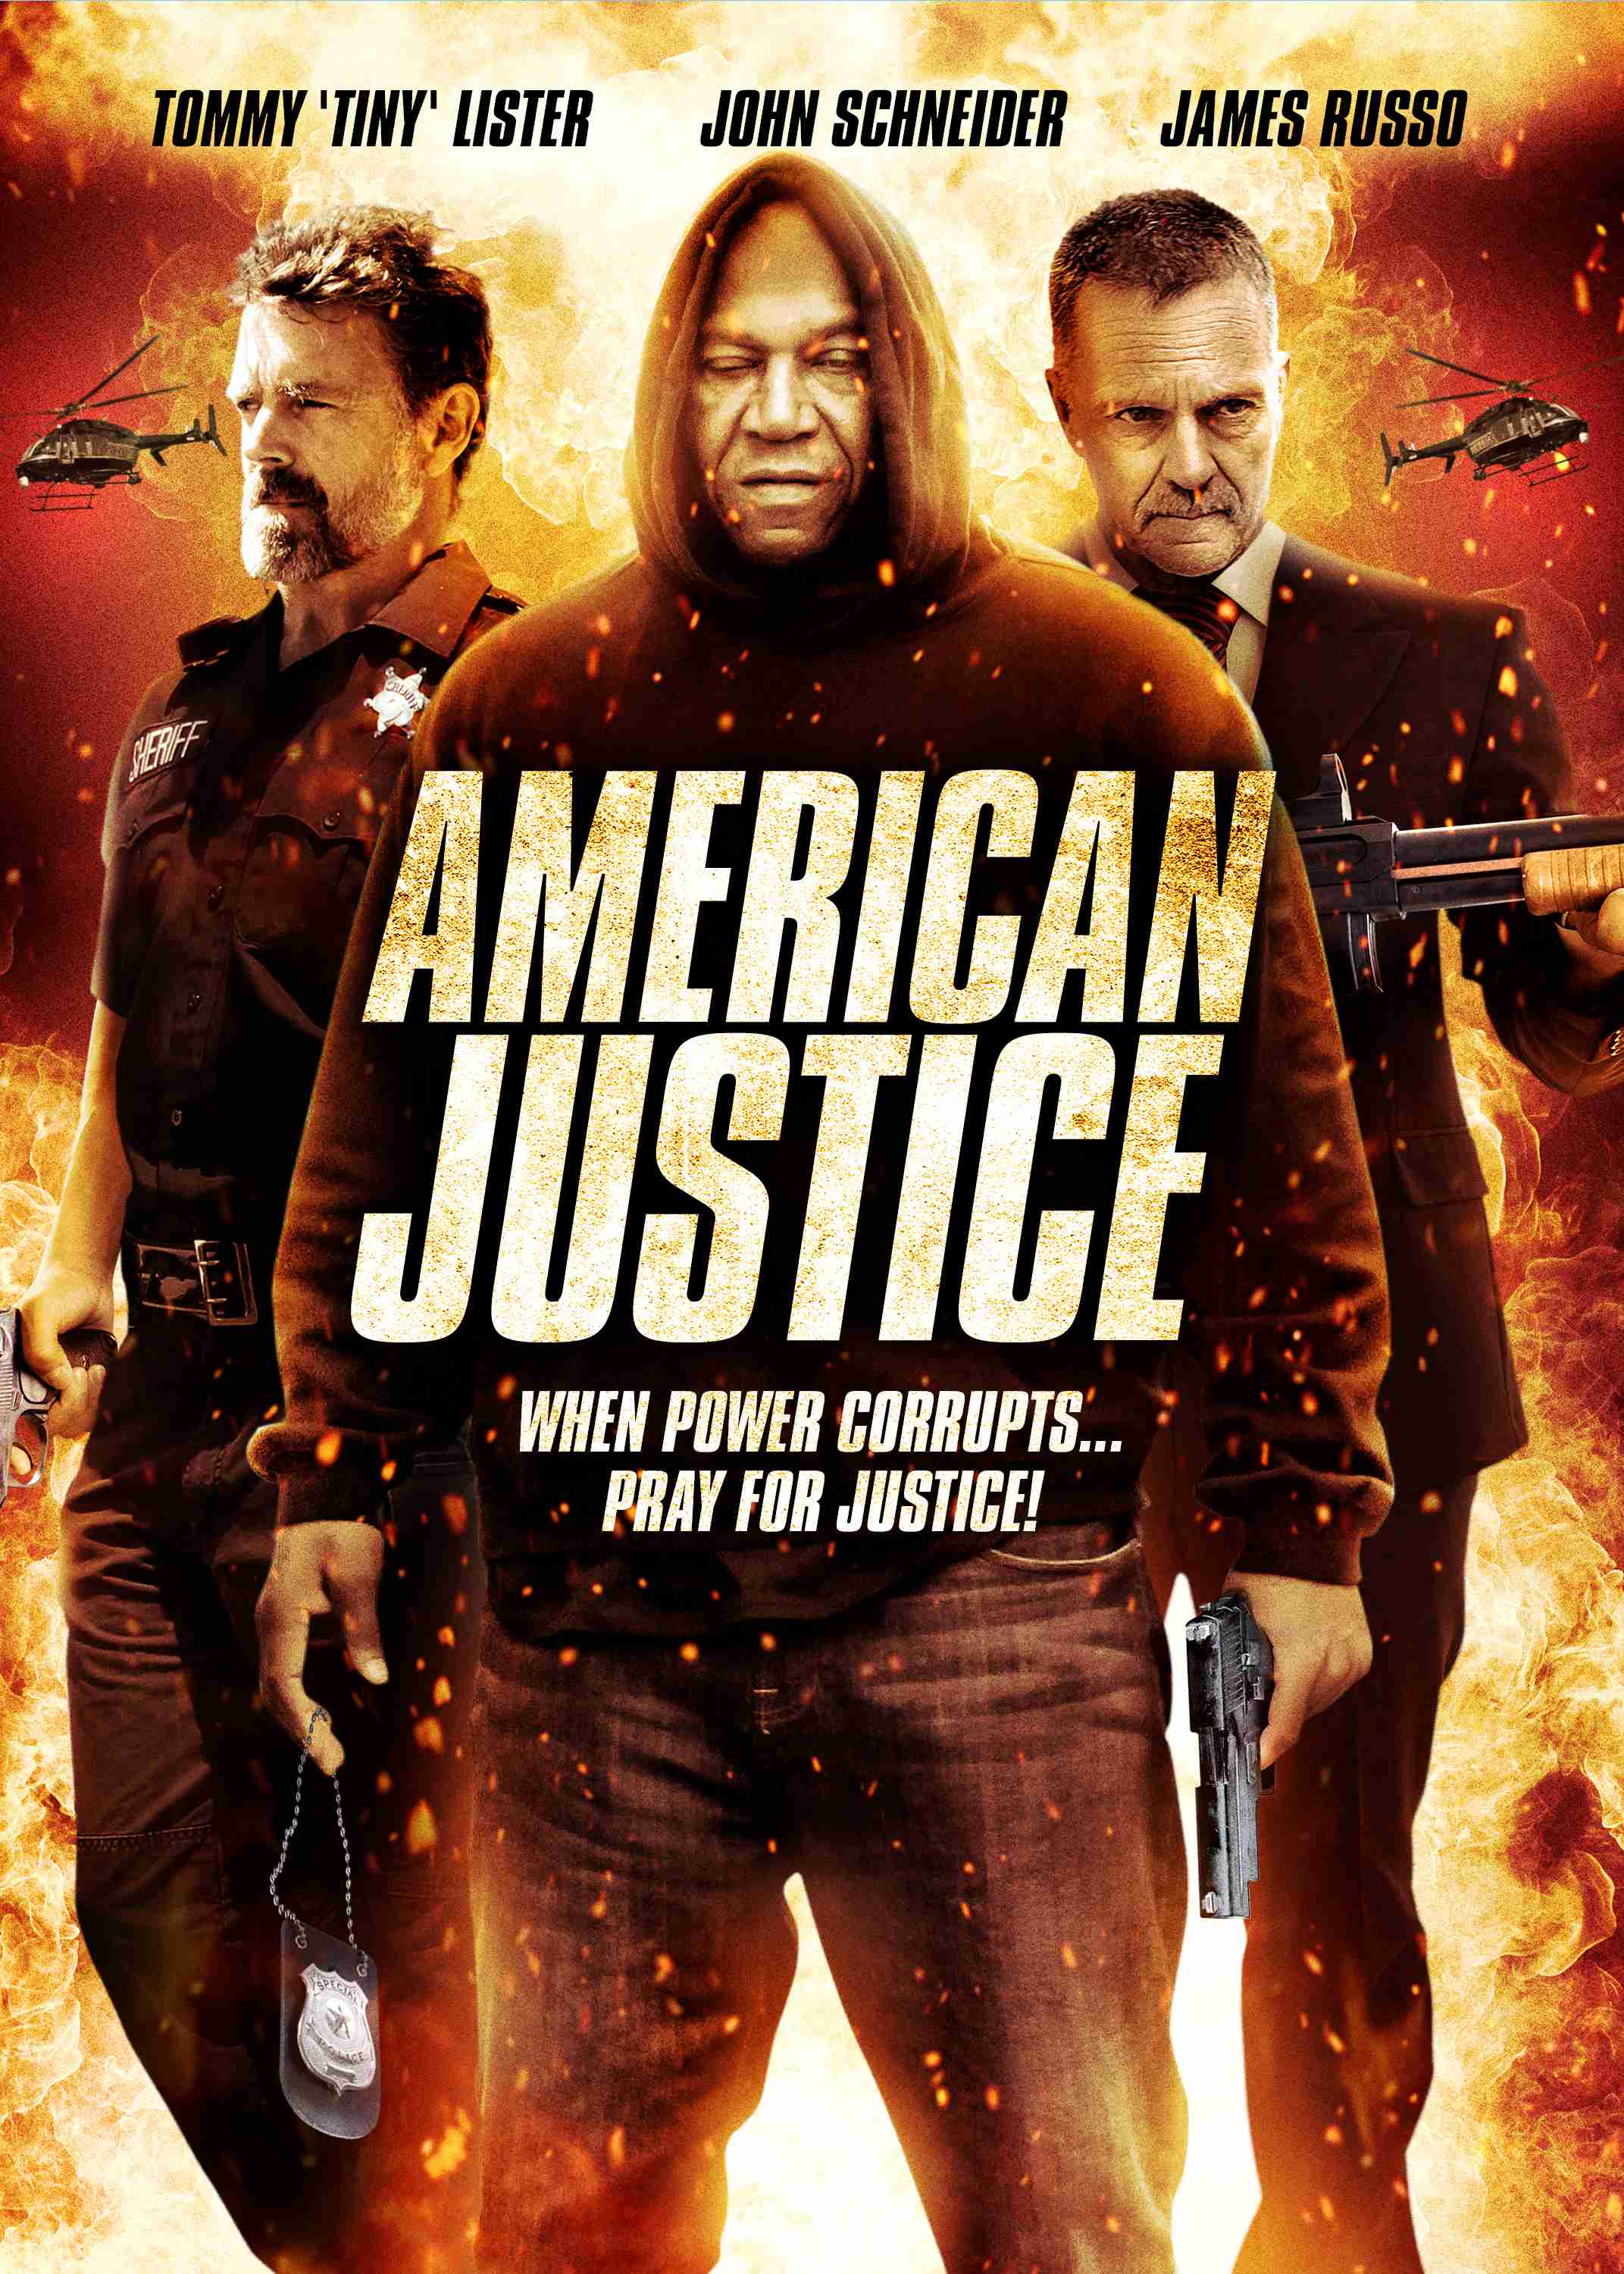 american justice (2015)dvdplanetstorepk